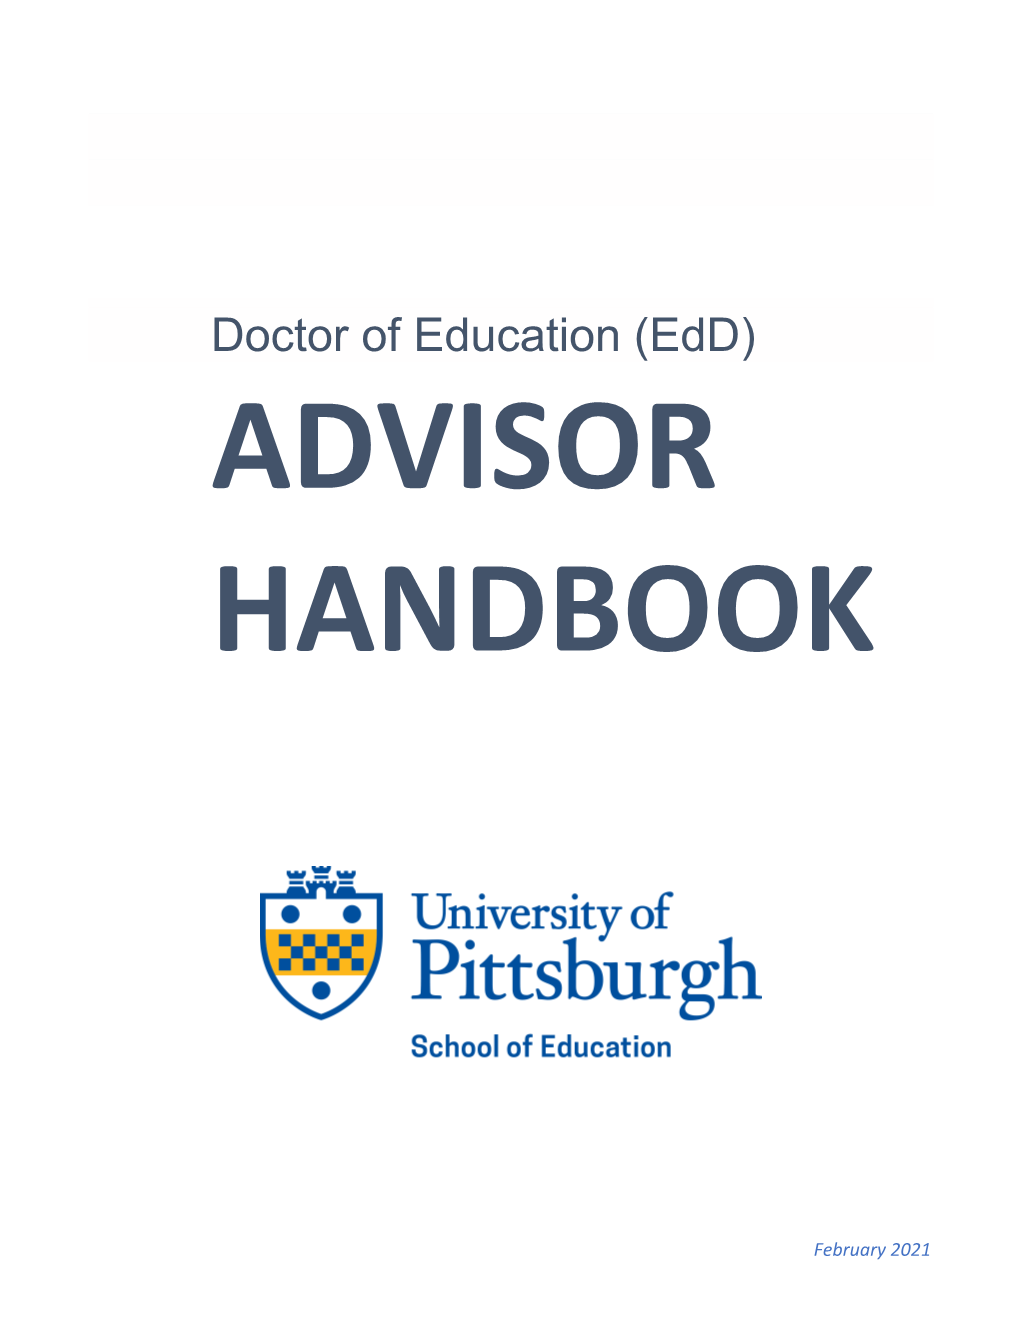 Doctor of Education (Edd) Advisor Handbook